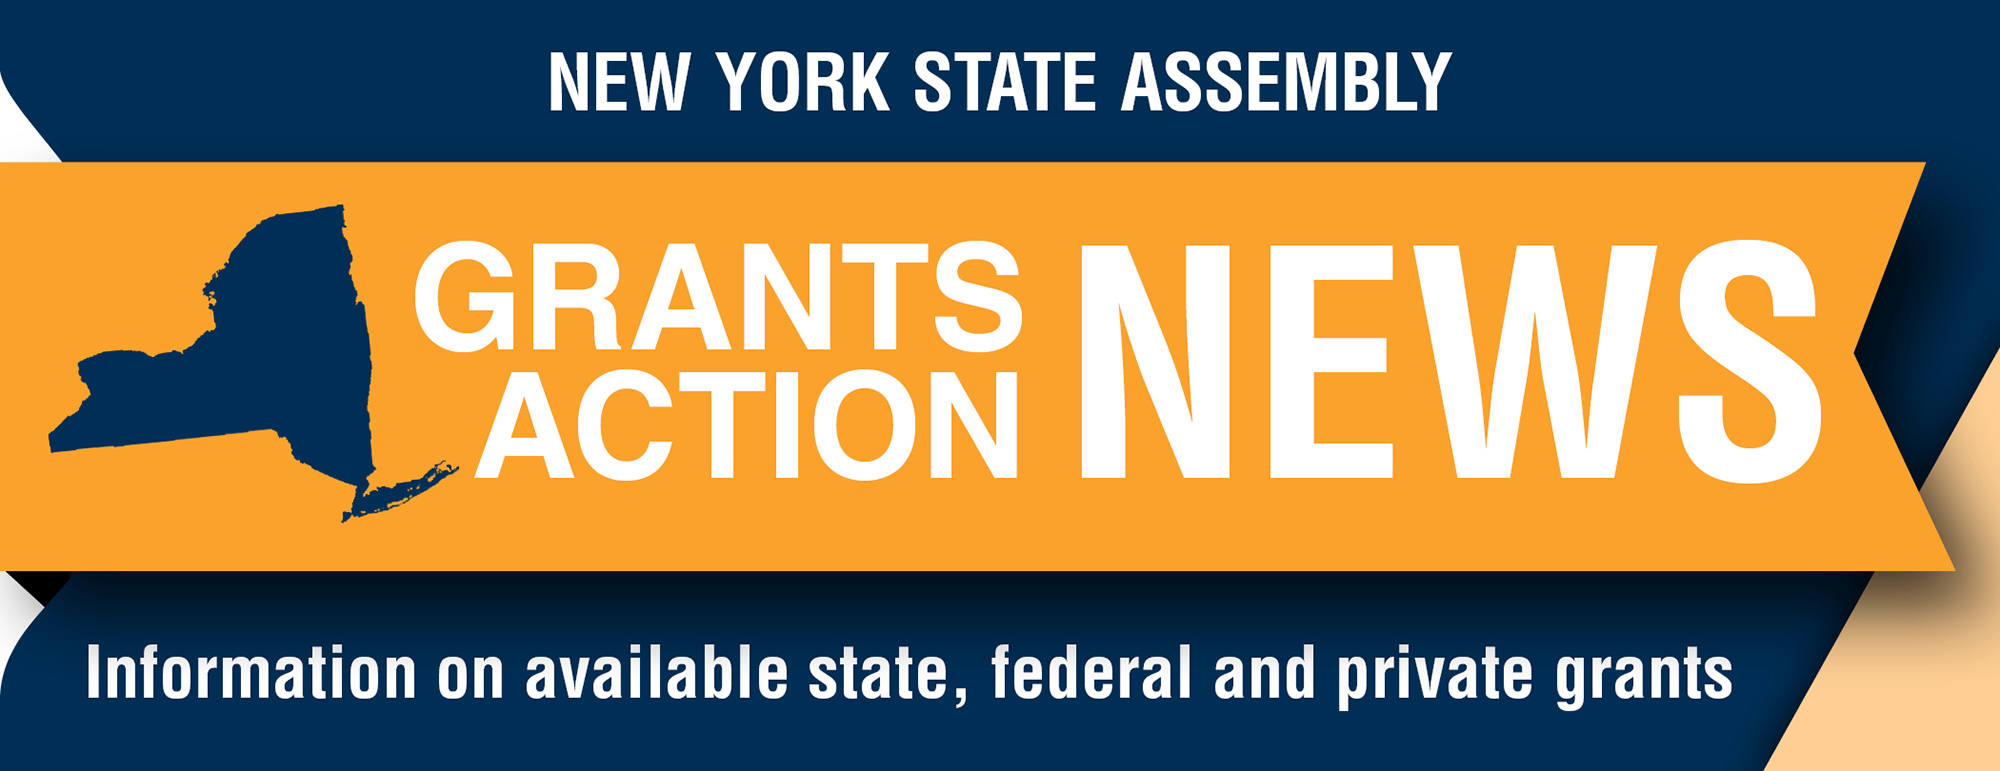 Grants Action News - Blue/Orange Large Size 2000x771